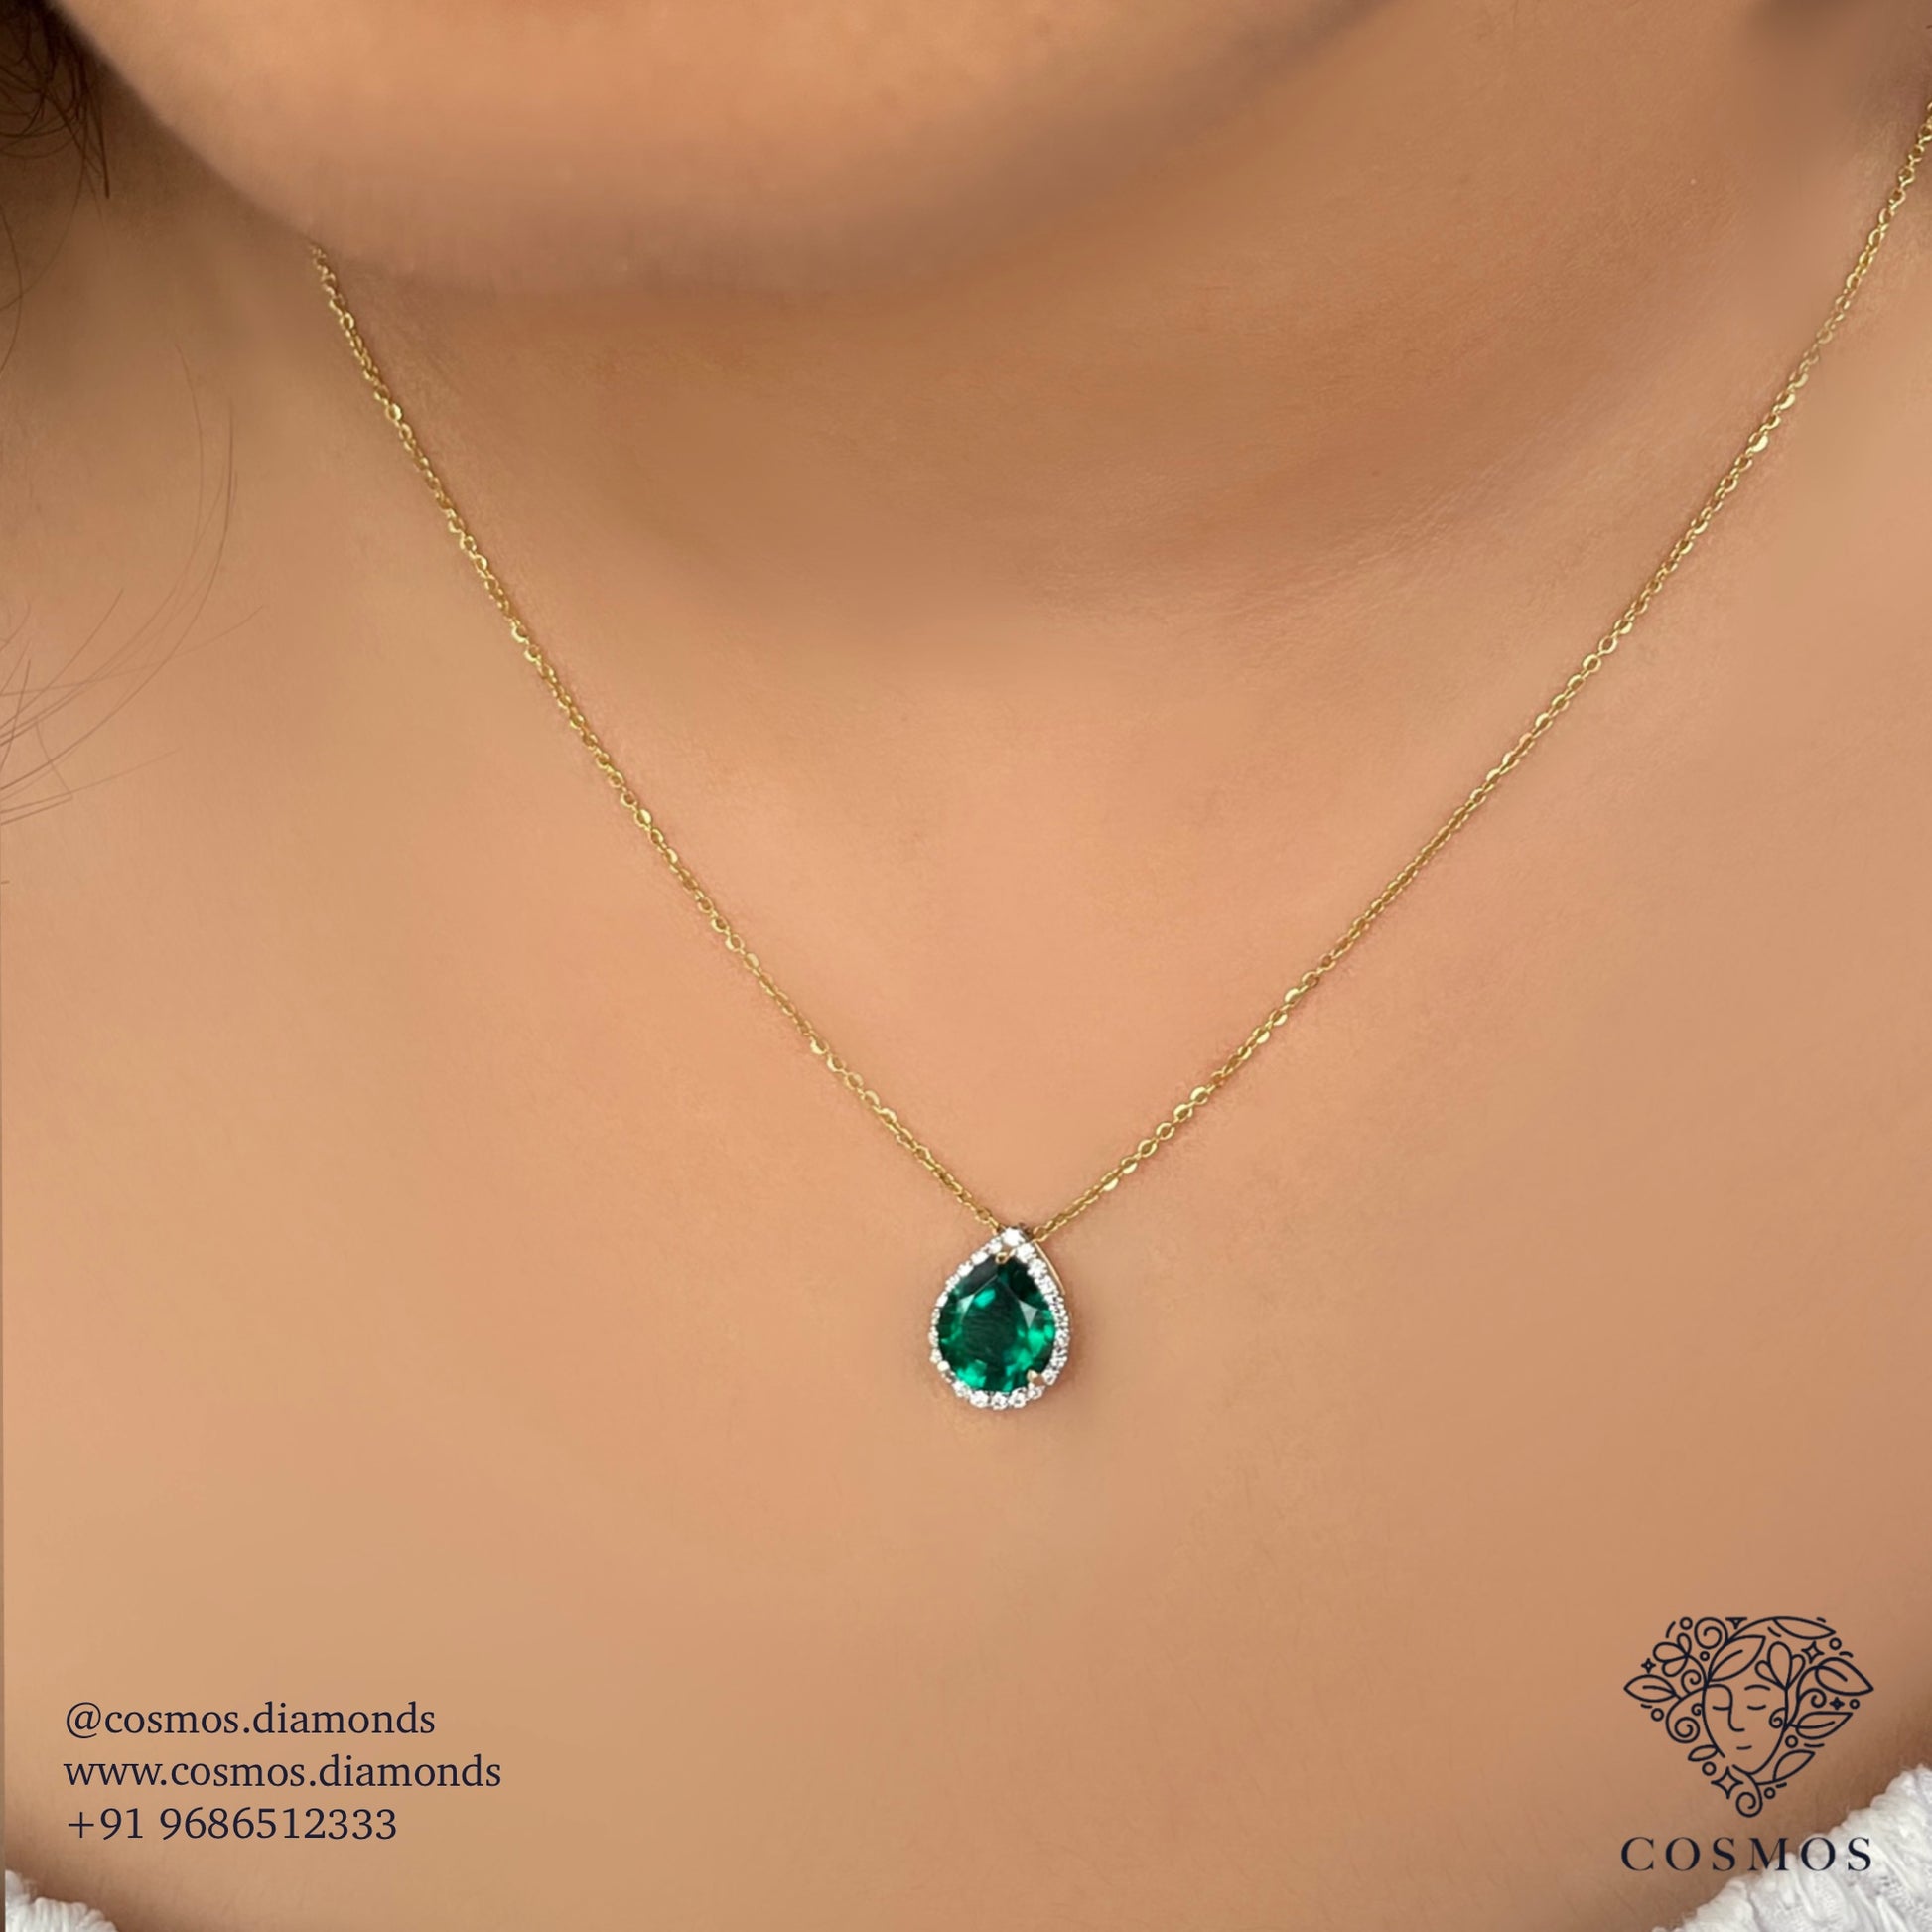 green pendant, labgrown diamonds, pendants online,emerald pendant, gold pendant, diamond pendant, magic pendant, cosmos diamonds